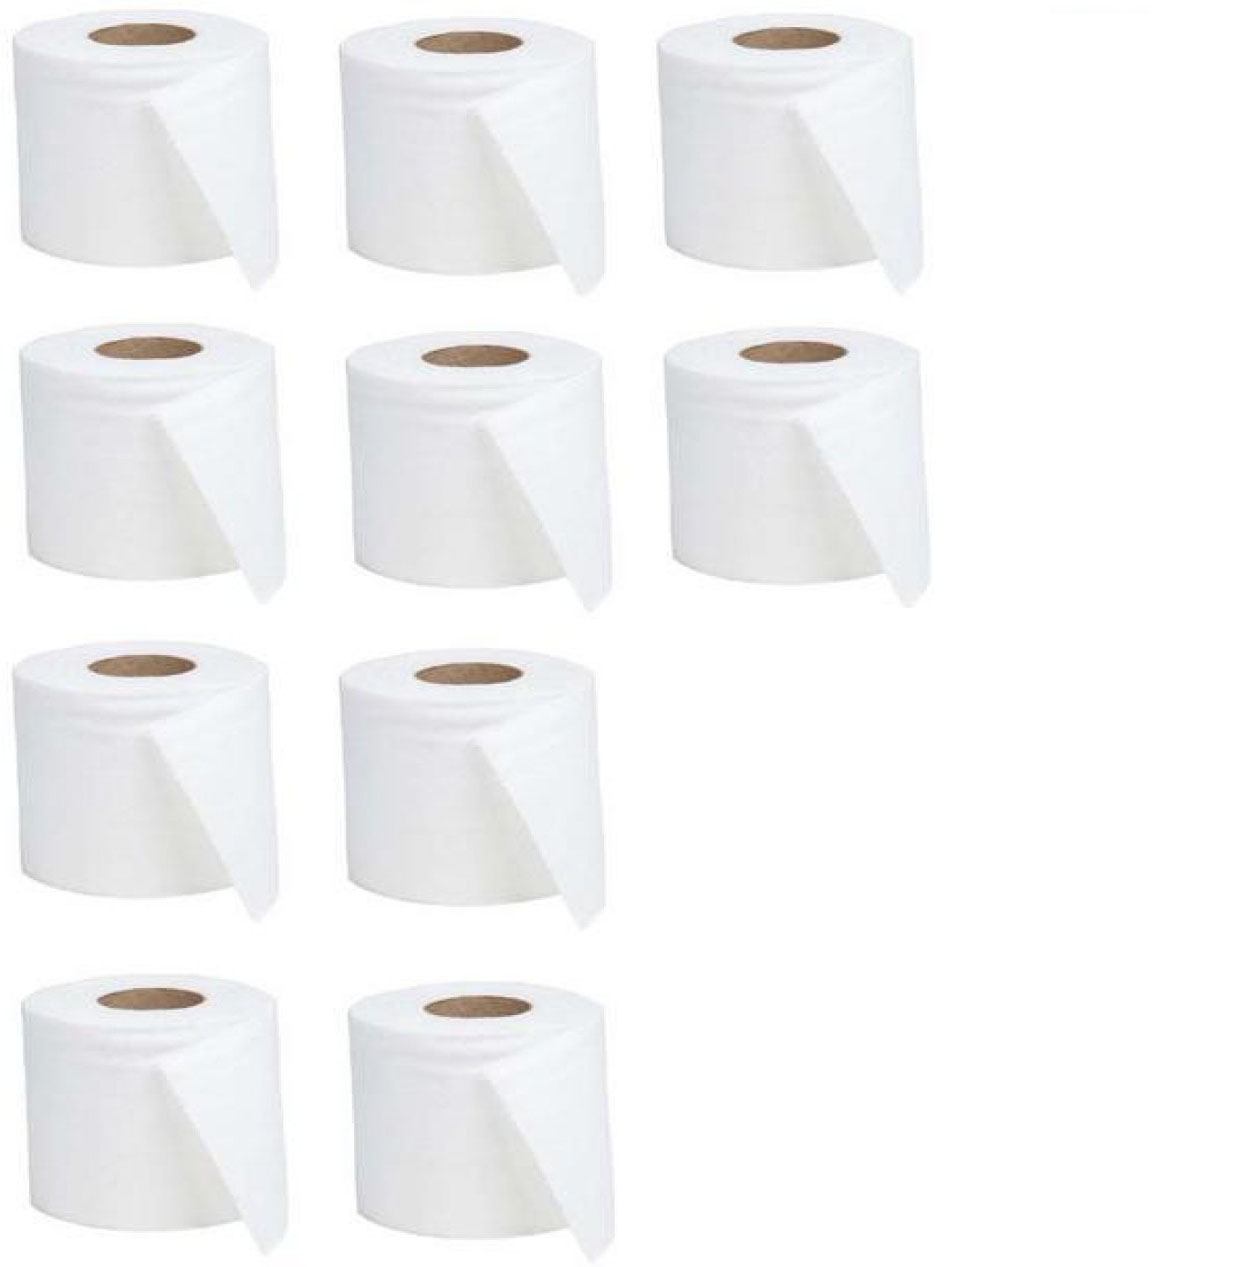 Toilet Papper Roll set of 10 pcs